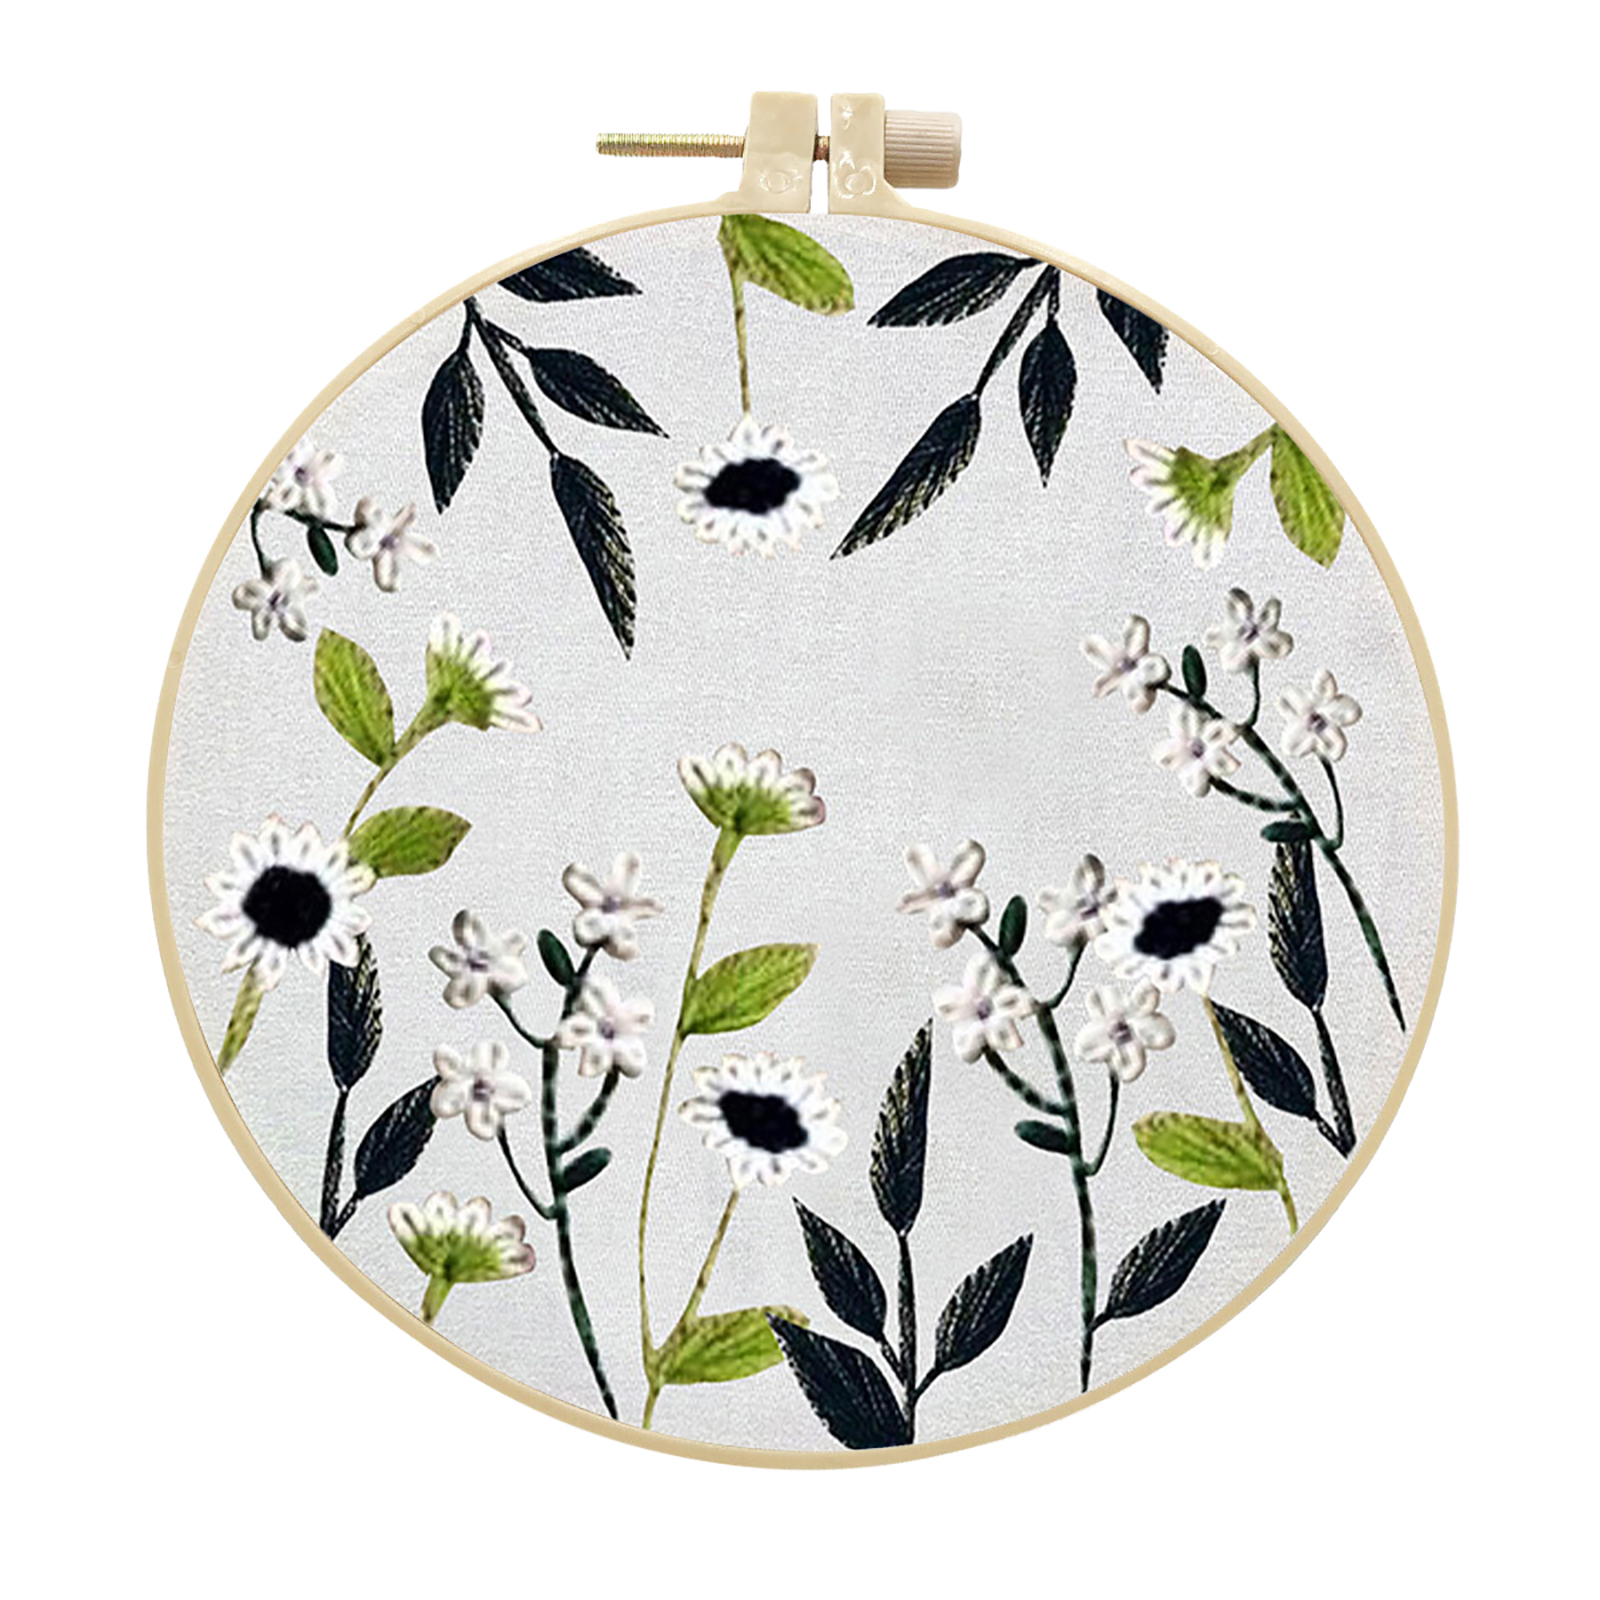 Embroidery Kits Cross stitch kits for Adult Beginner - Wild Chrysanthemum Pattern